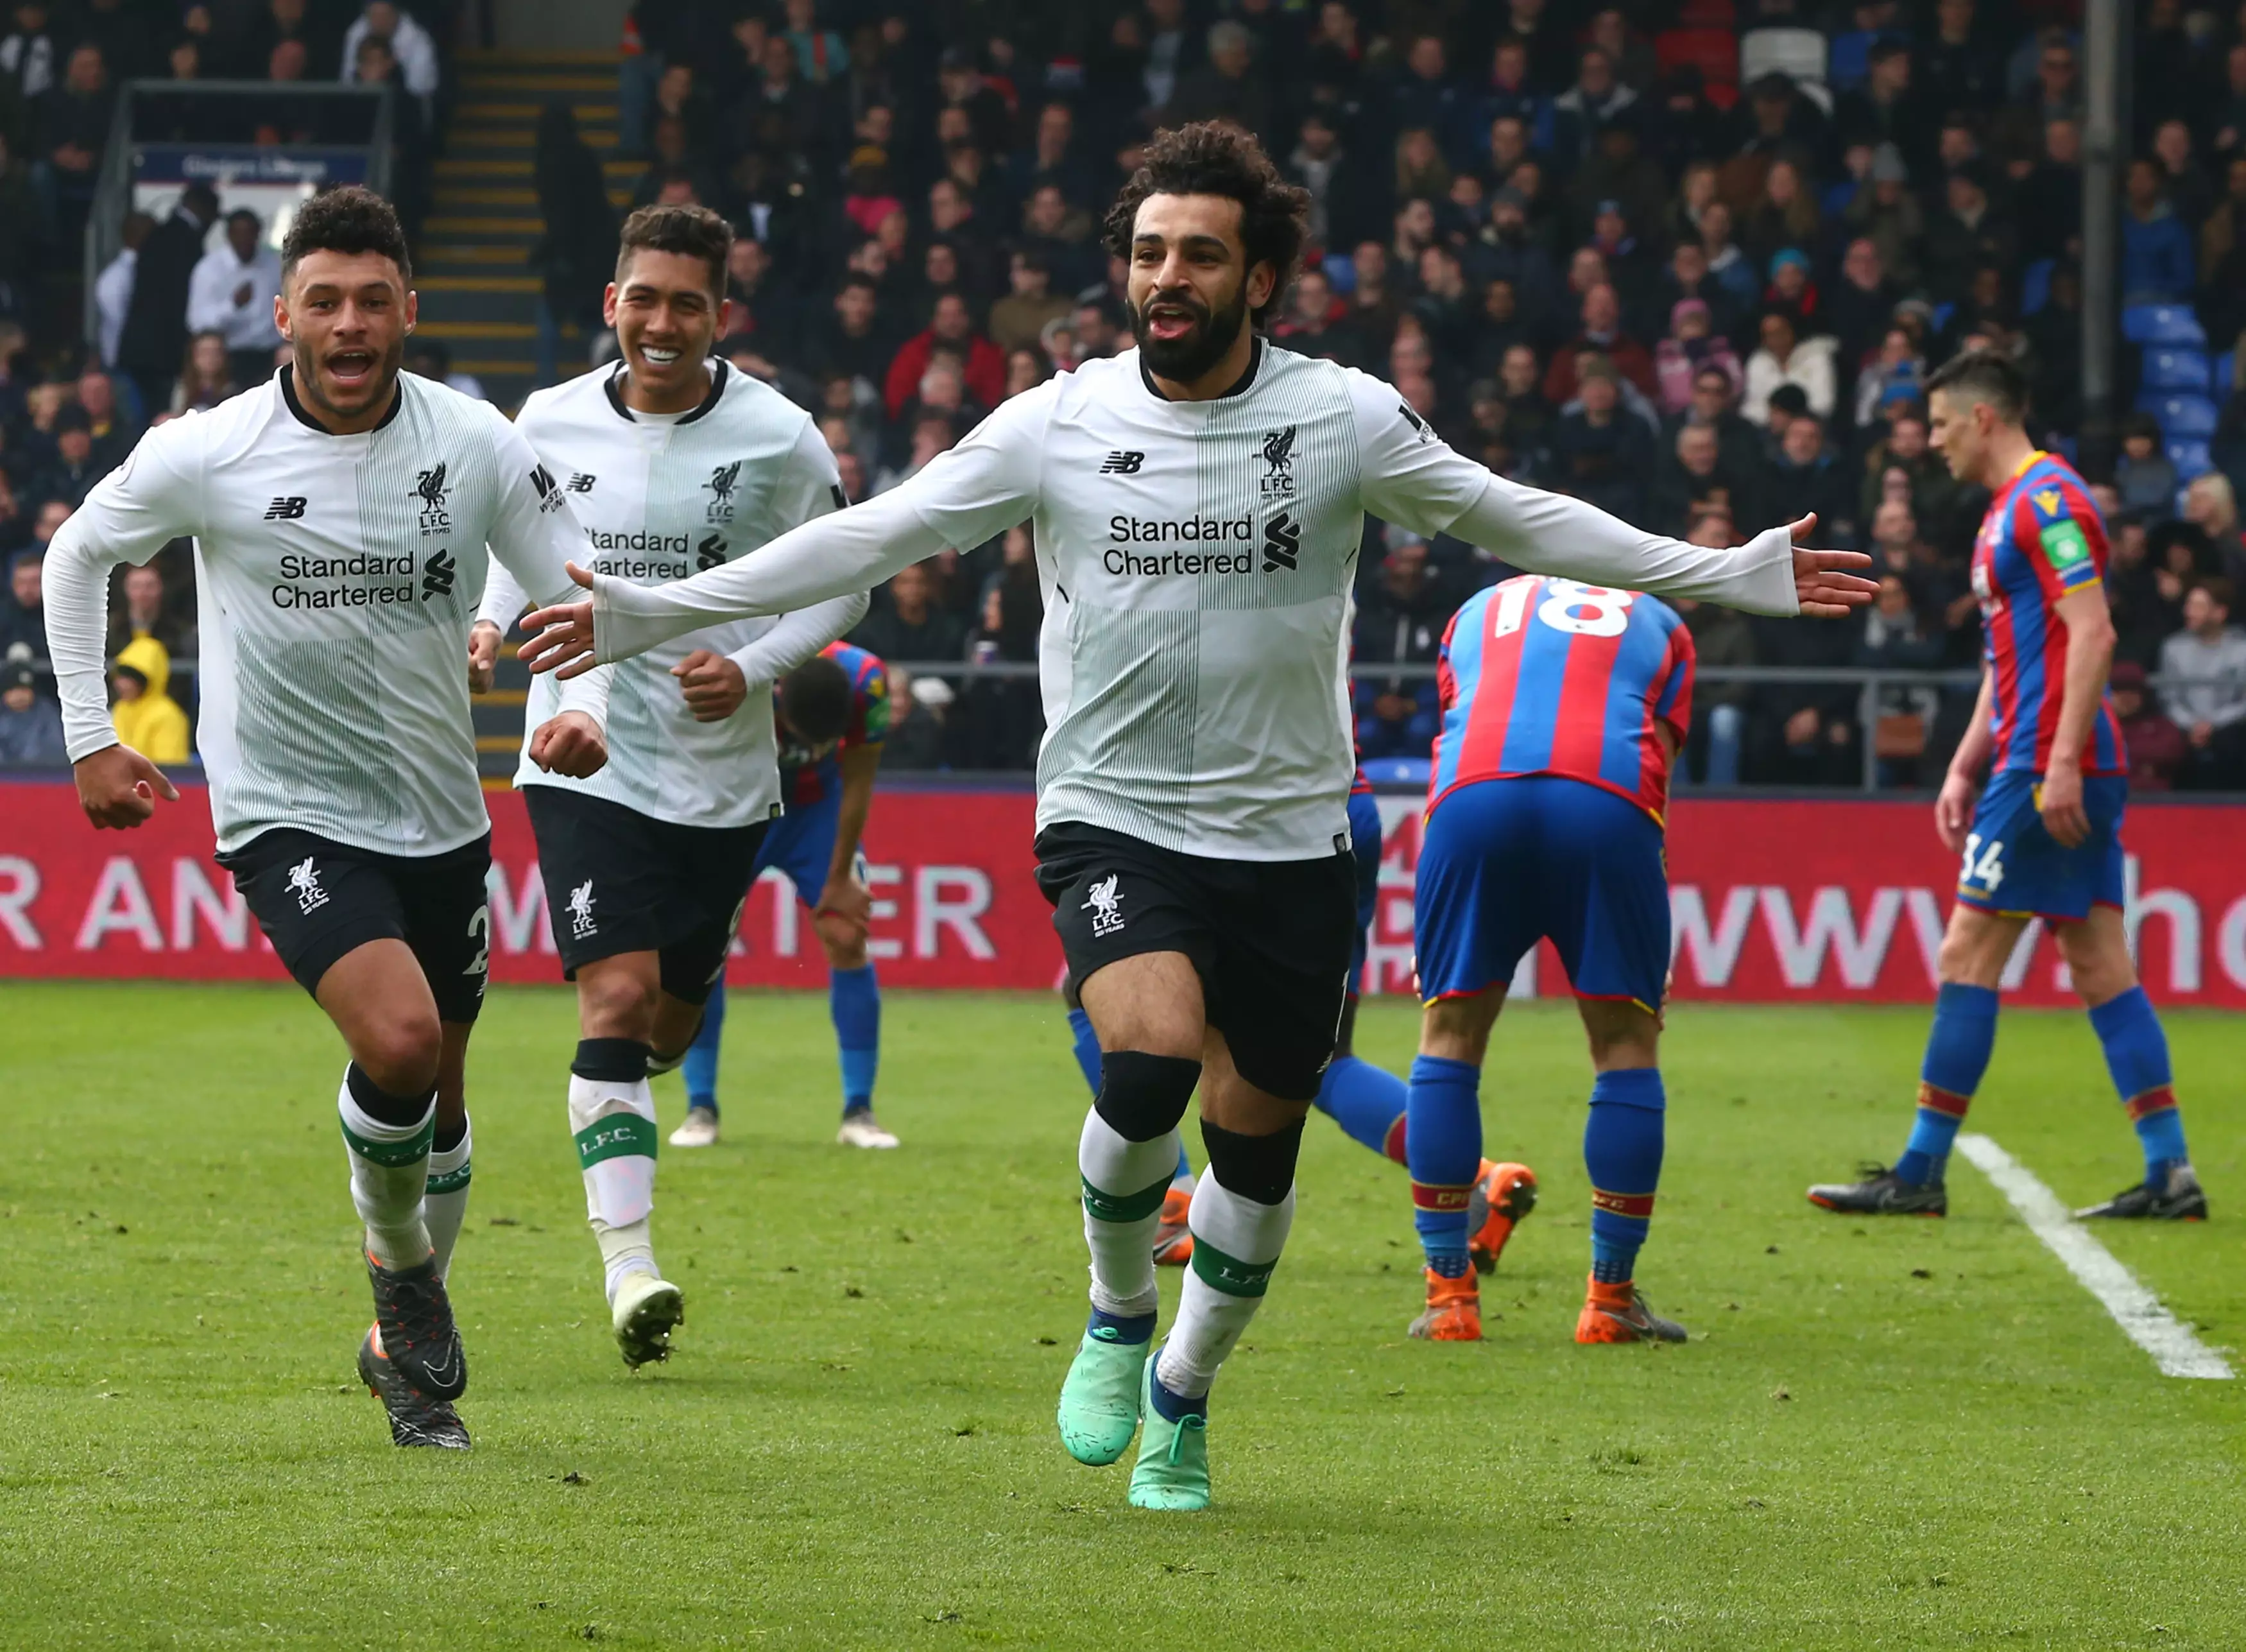 Salah celebrates scoring a goal in the Premier League. Image: PA